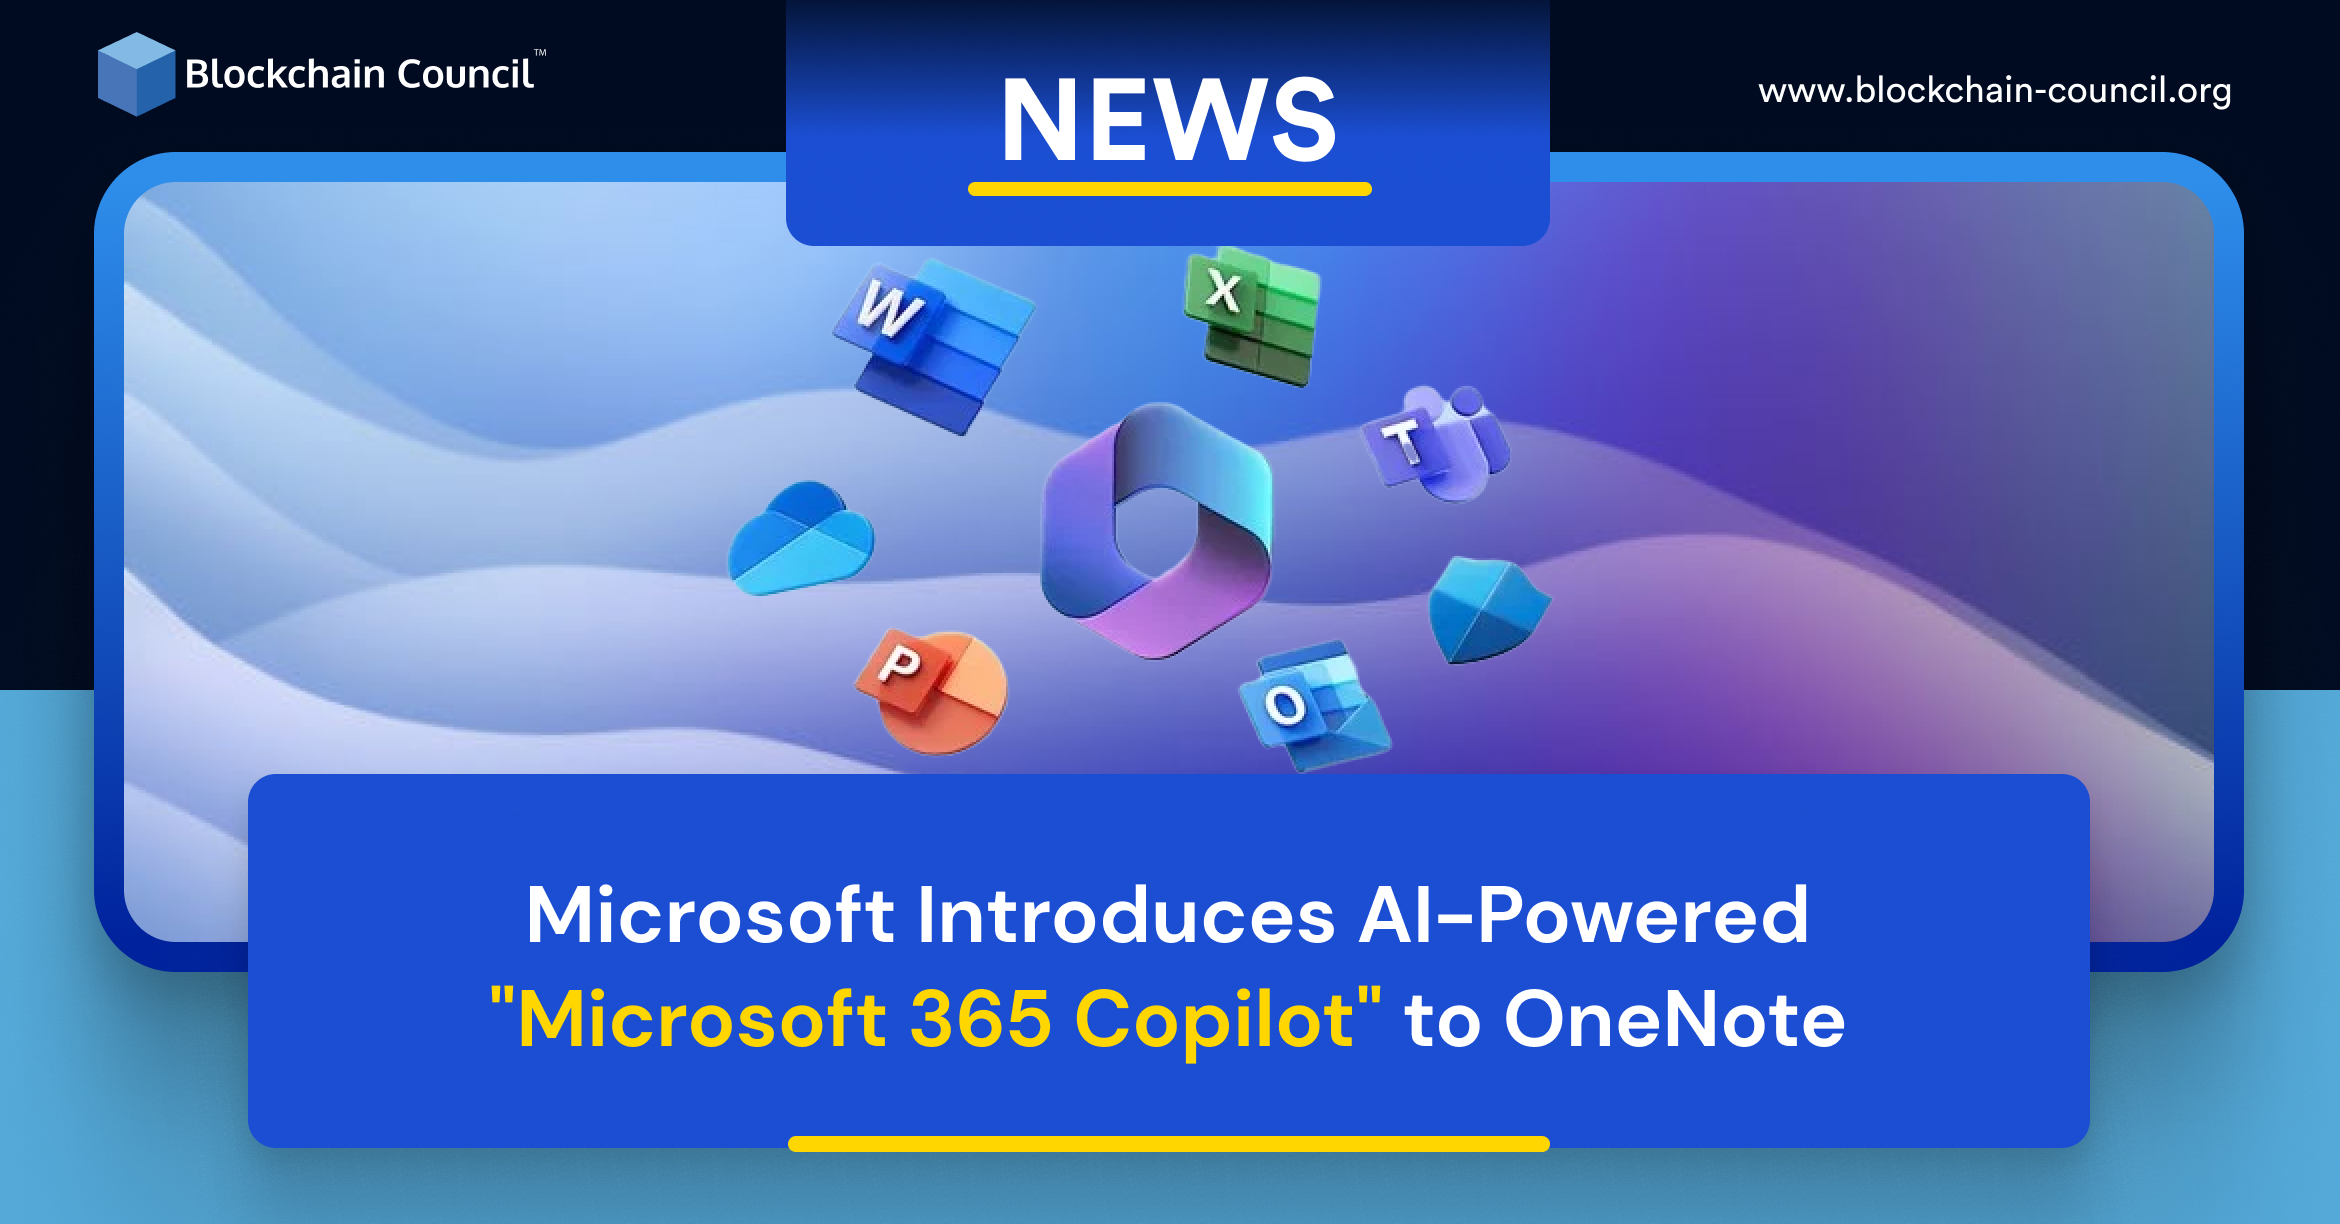 Microsoft Introduces AI-Powered “Microsoft 365 Copilot” to OneNote